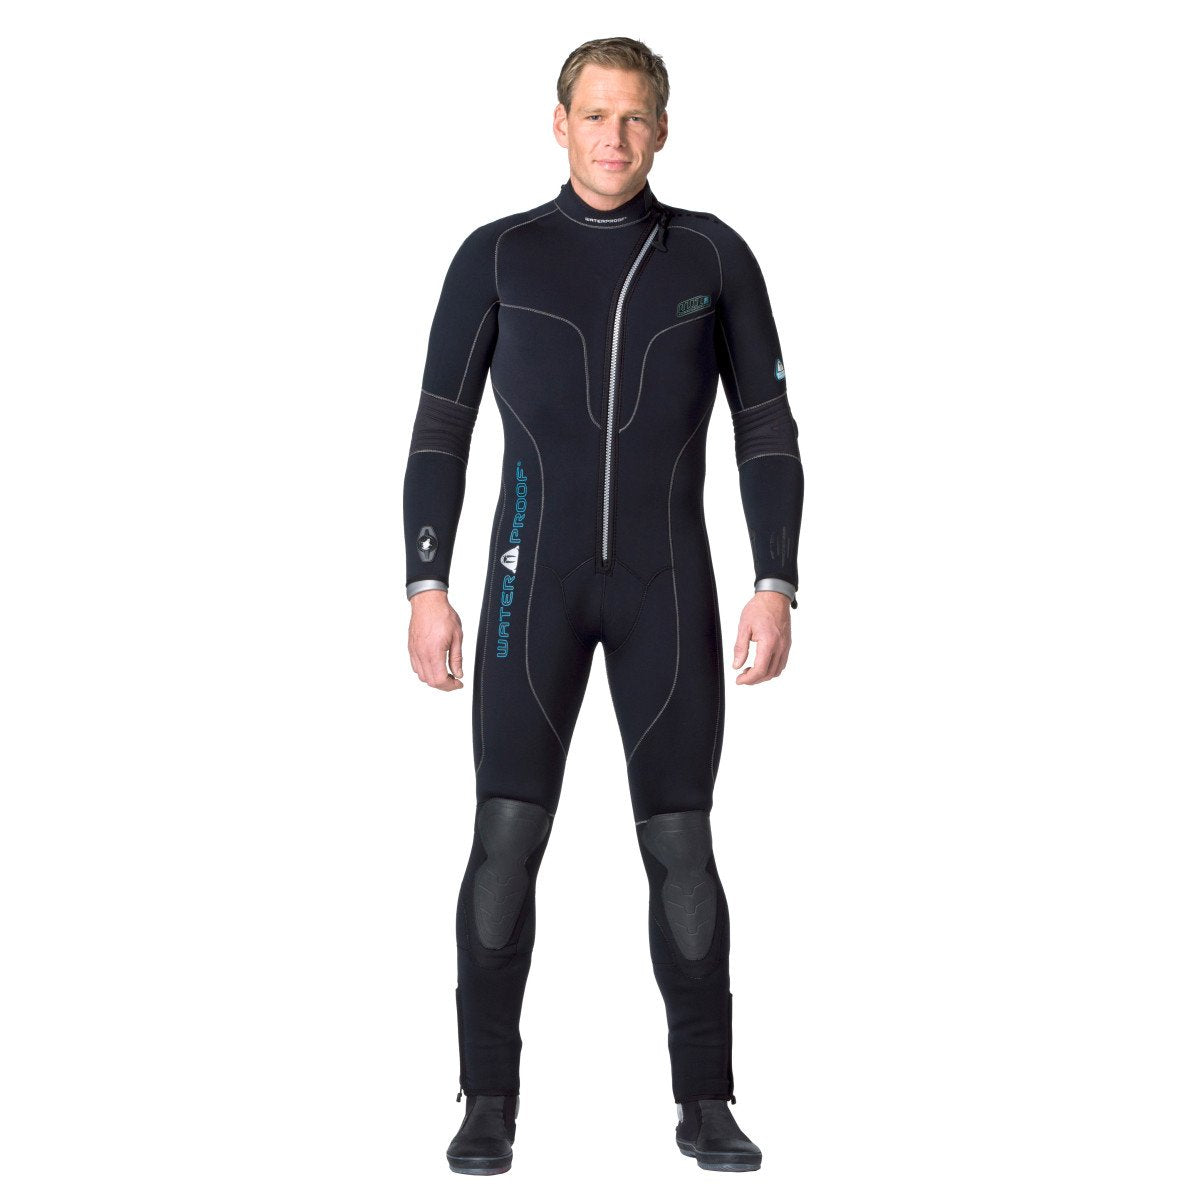 Waterproof SALE Waterproof W1 5mm Wetsuit Mens by Oyster Diving Shop